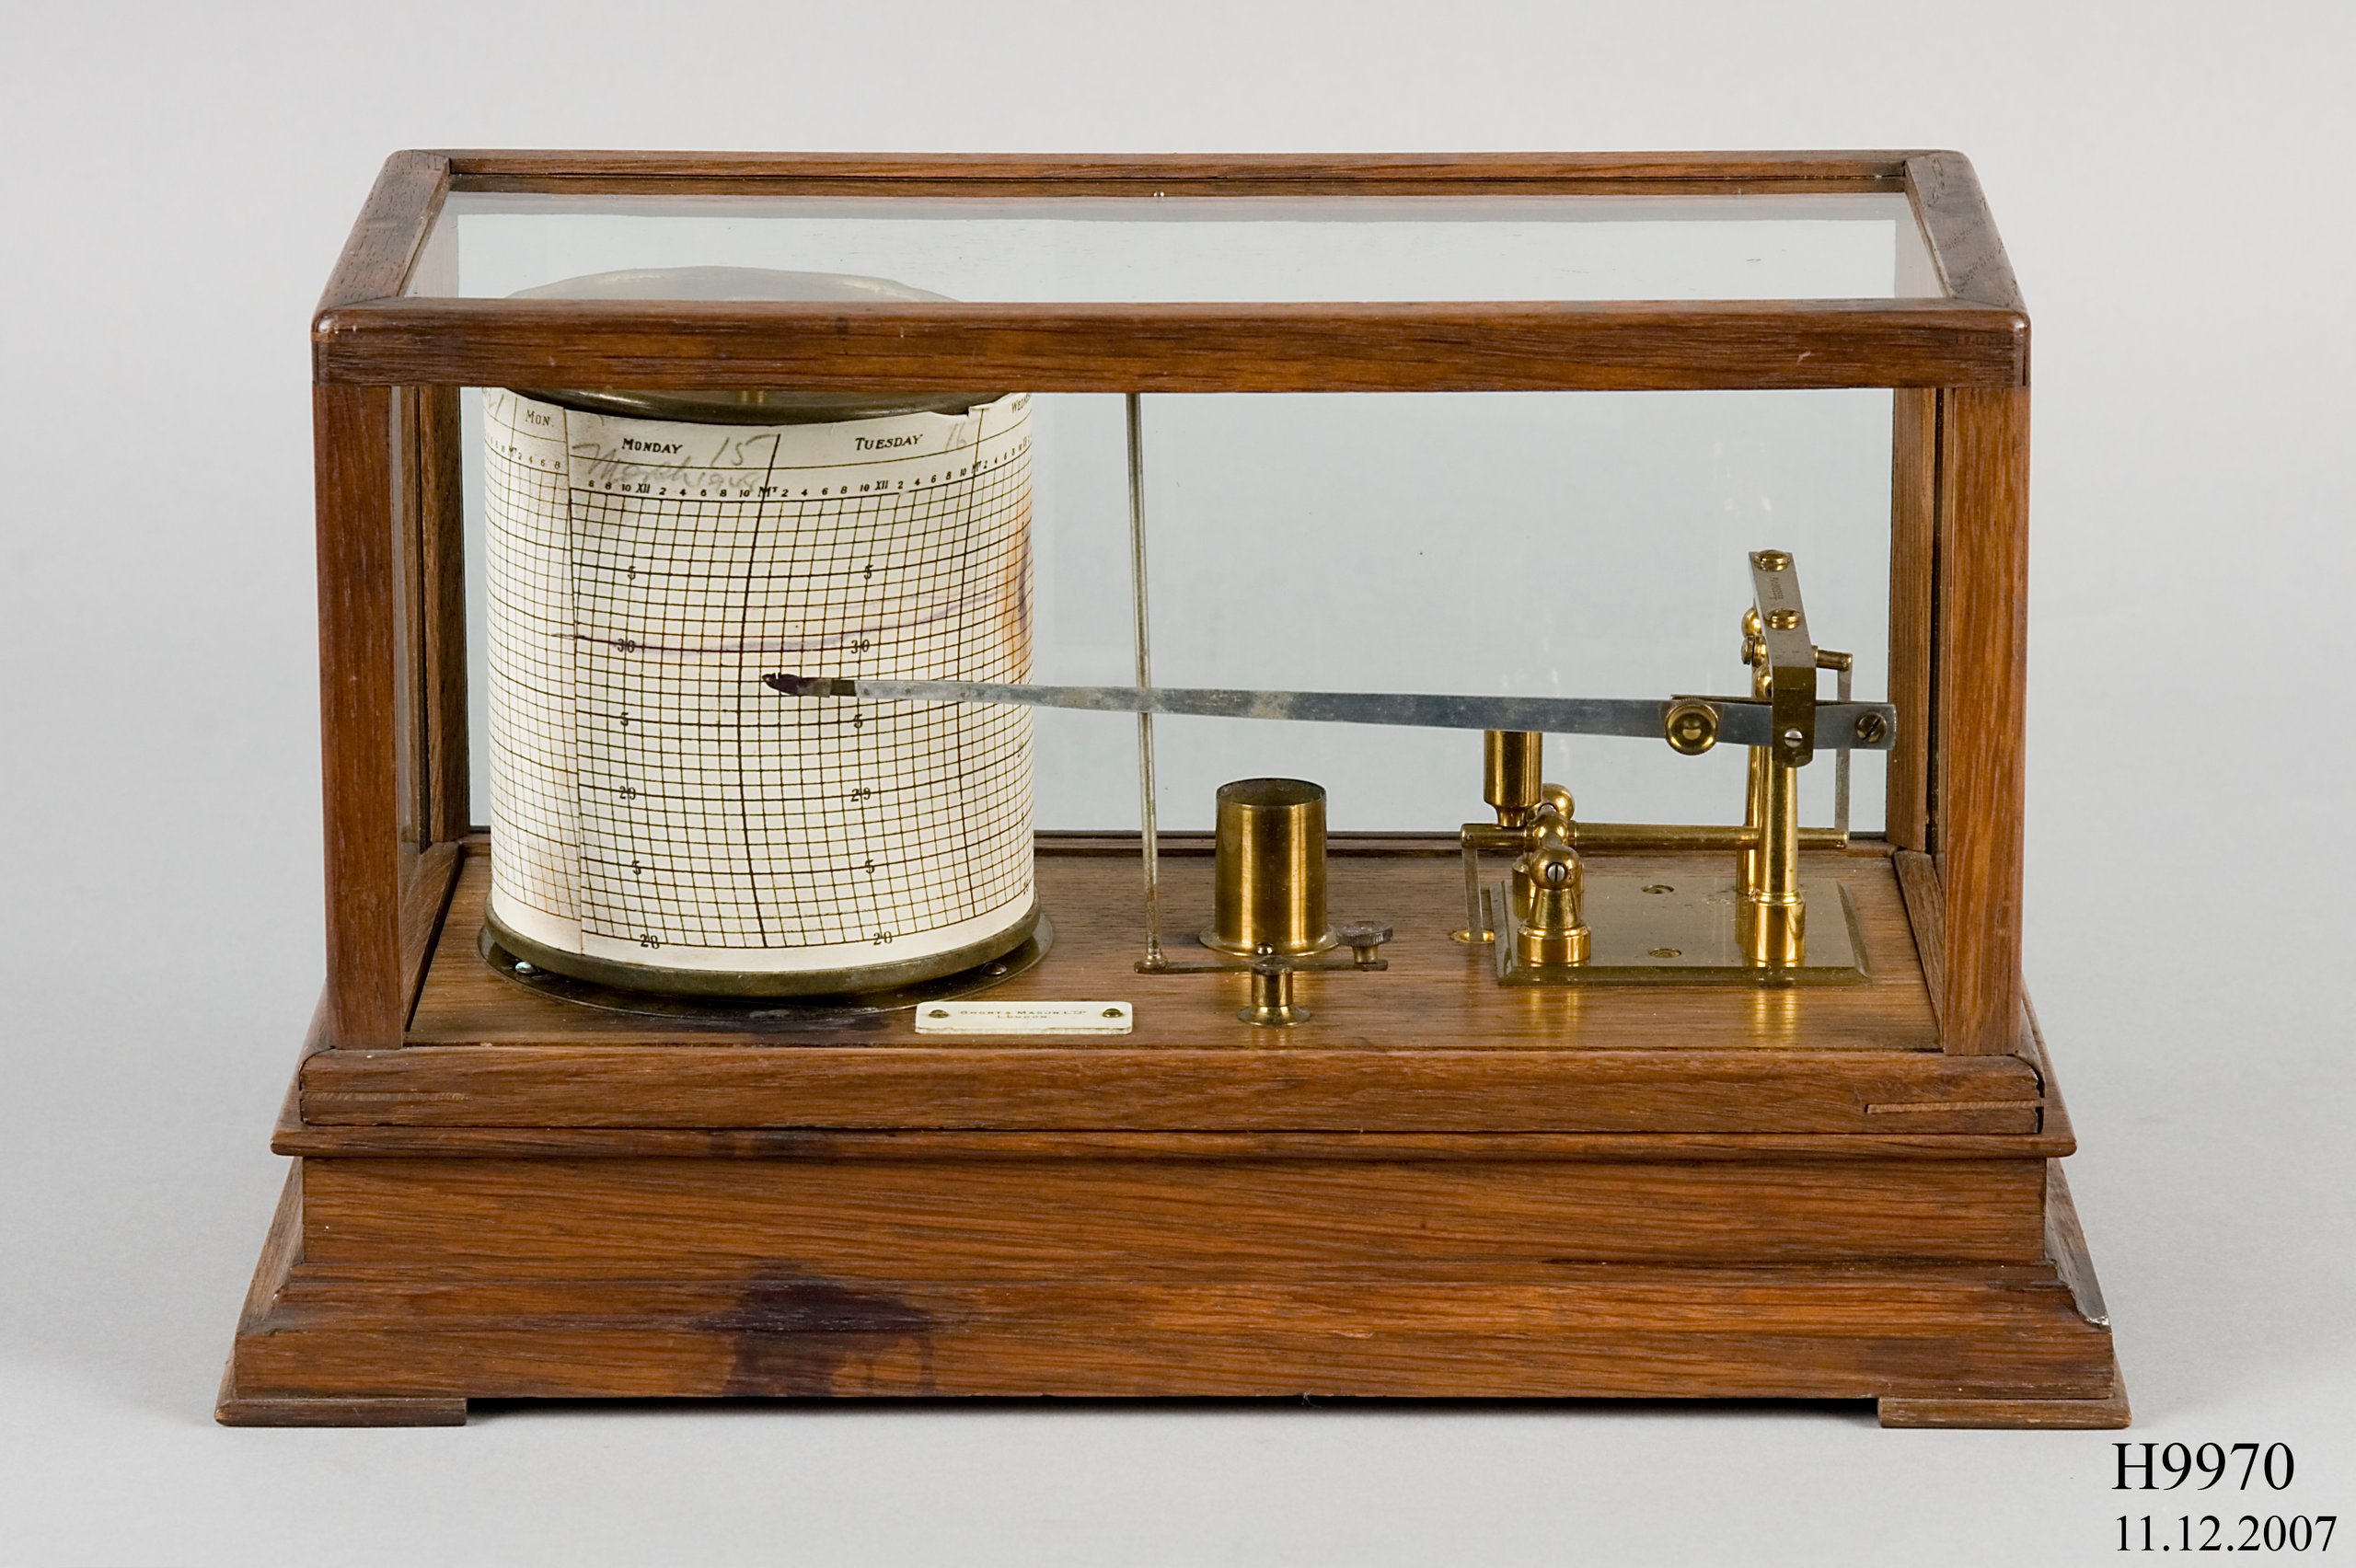 Aneroid barometer made by Short and Mason